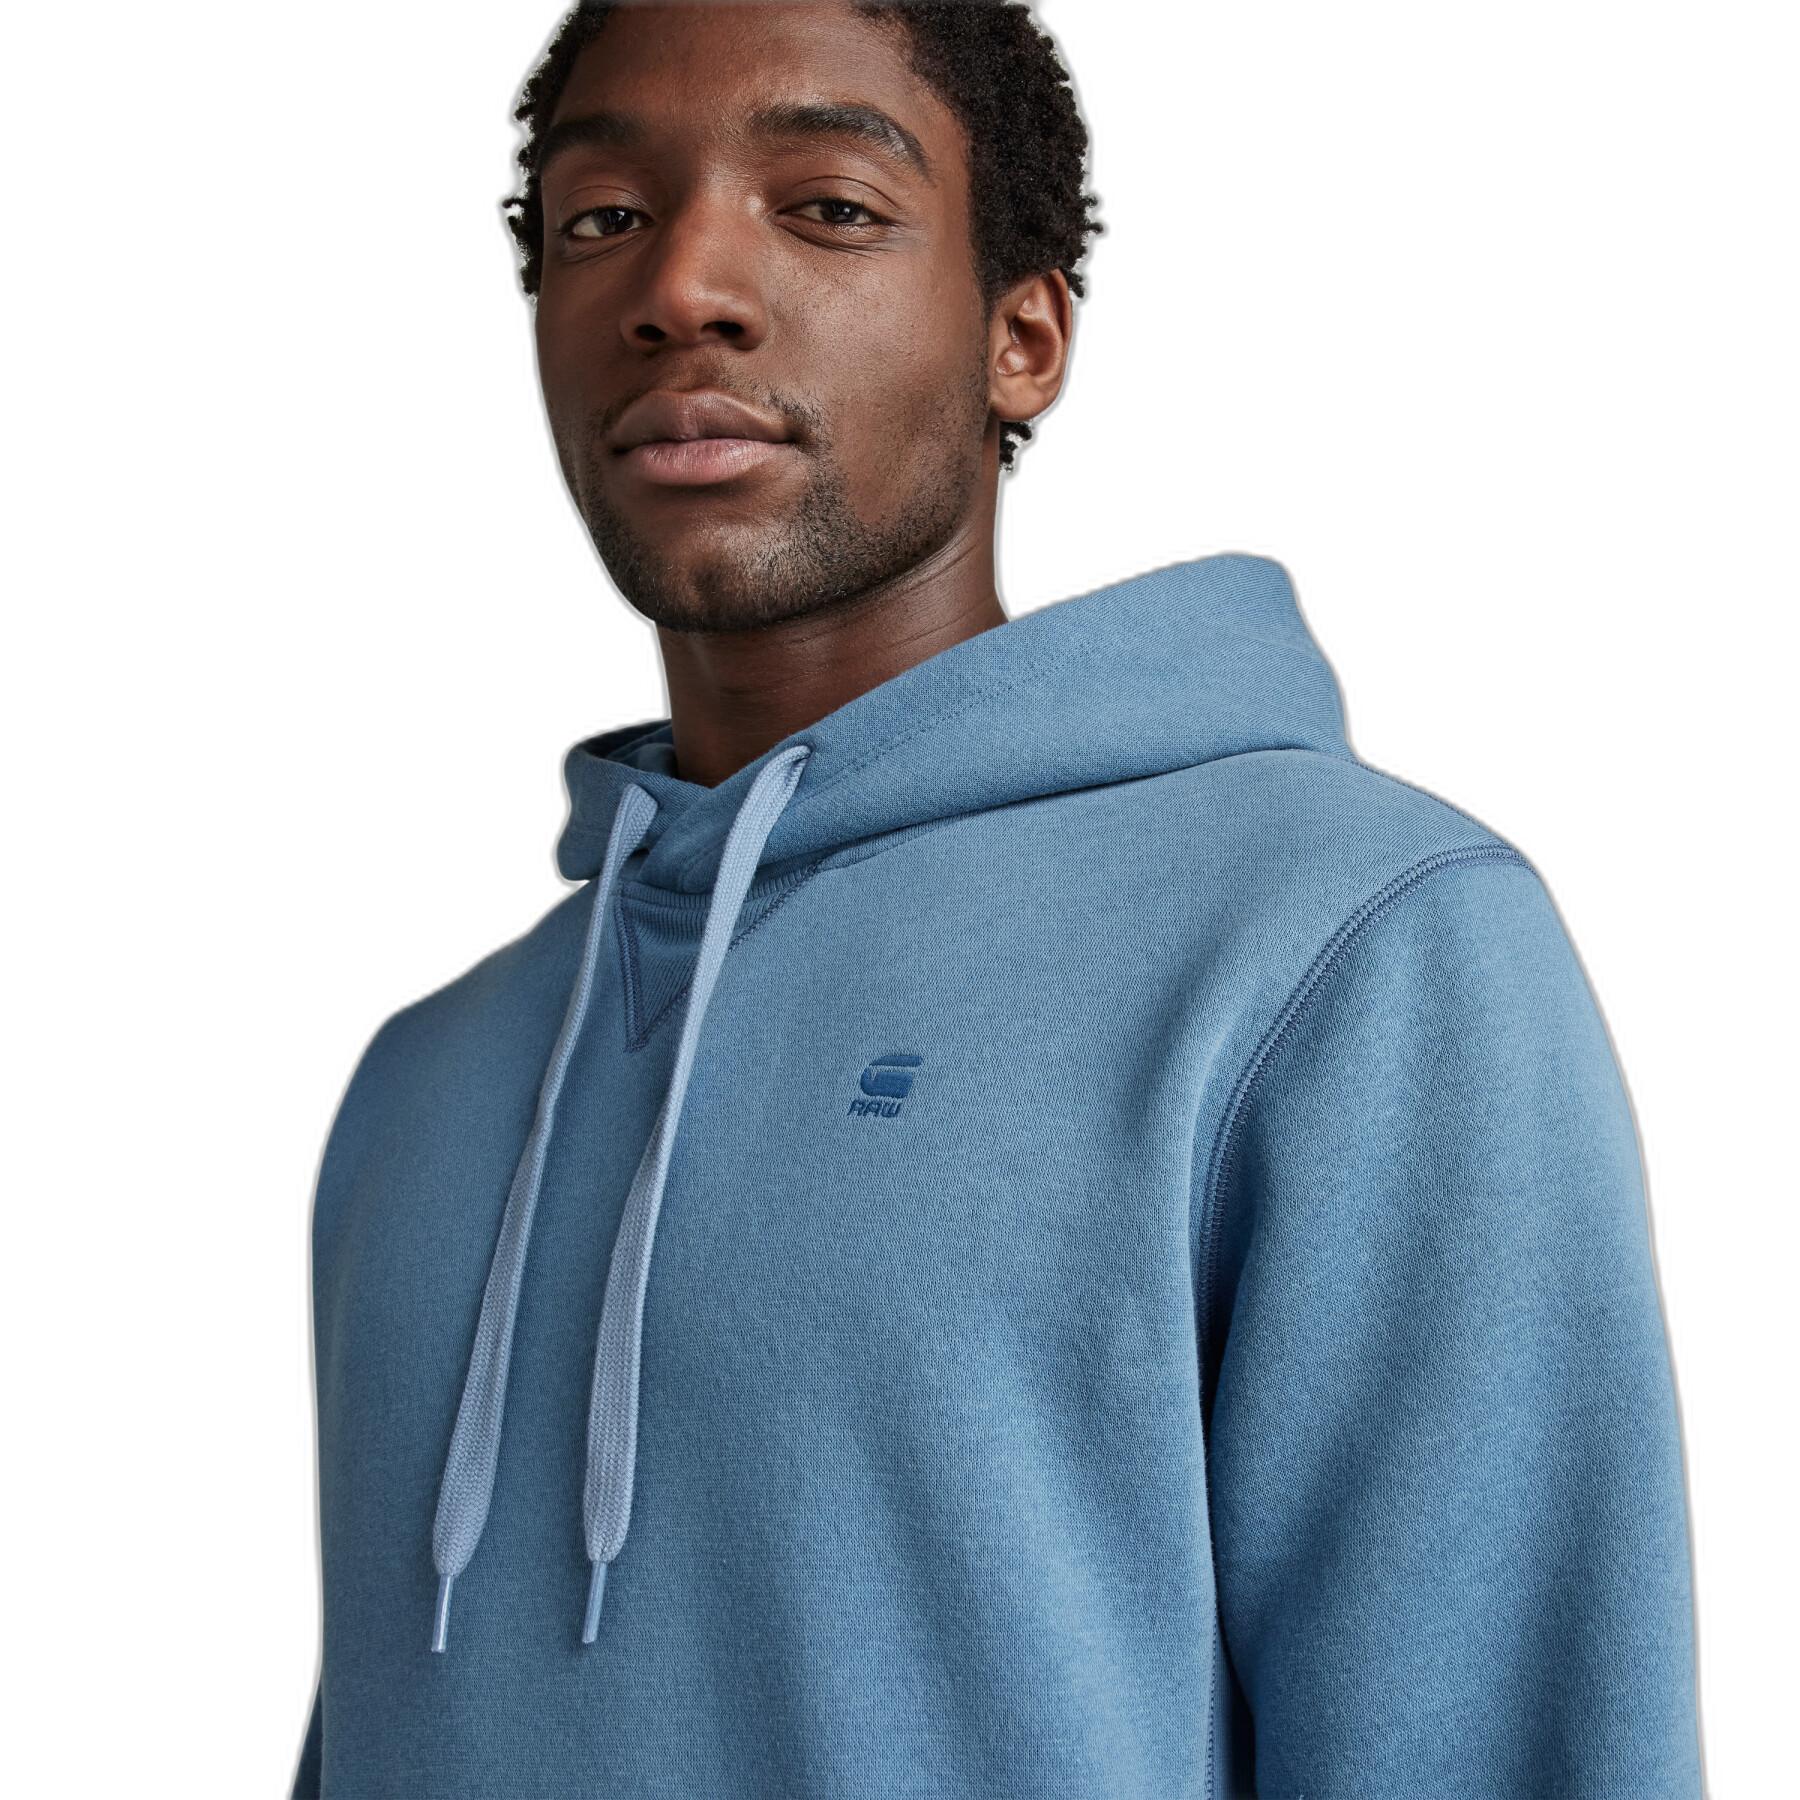 Sweatshirt G-Star Premium core hdd